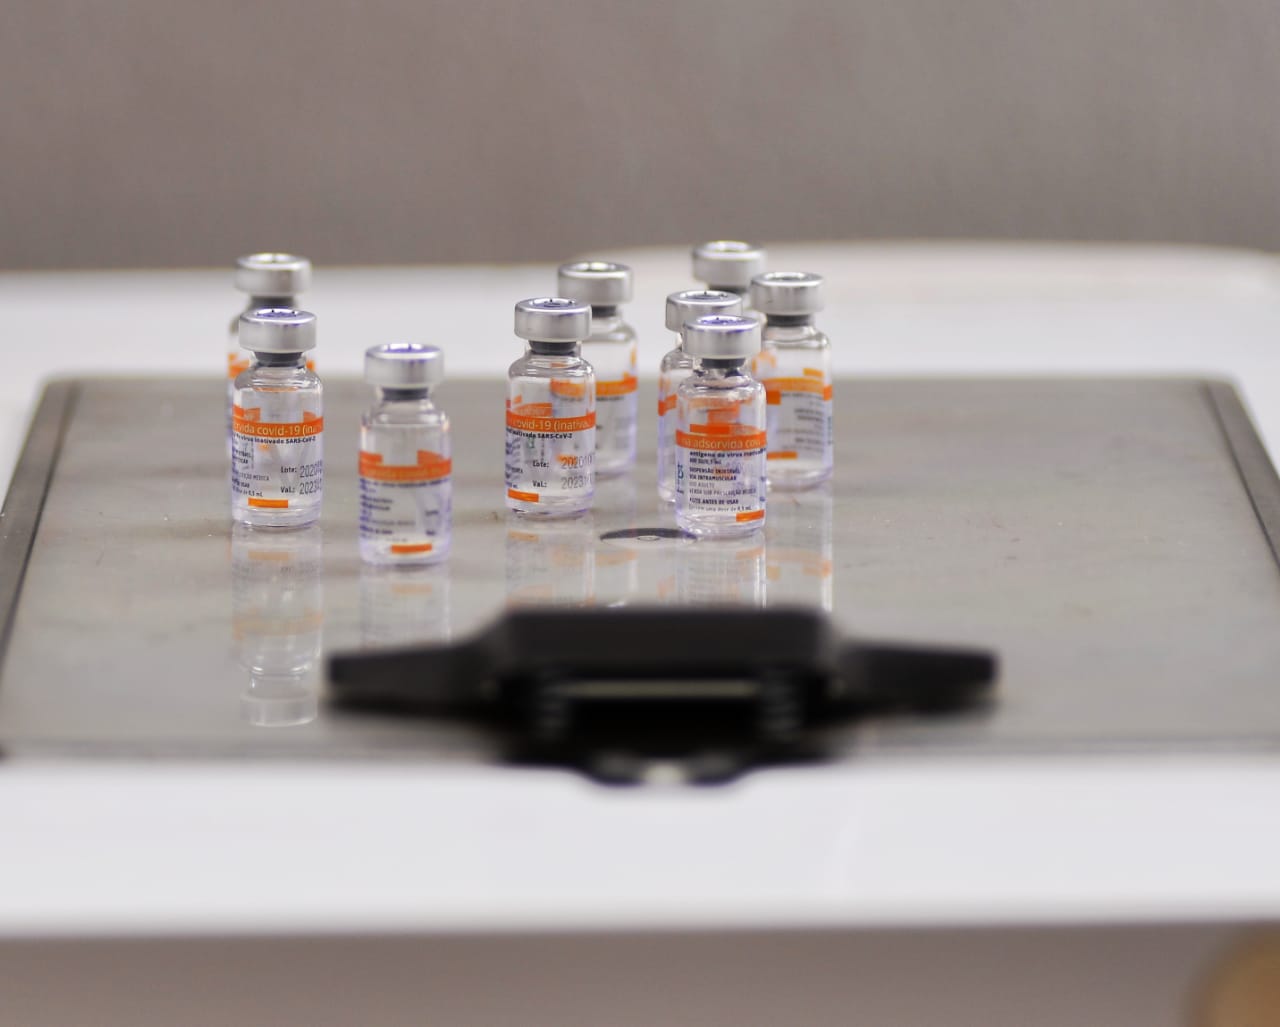 Governo dá aval a compra de vacinas privadas contra Covid